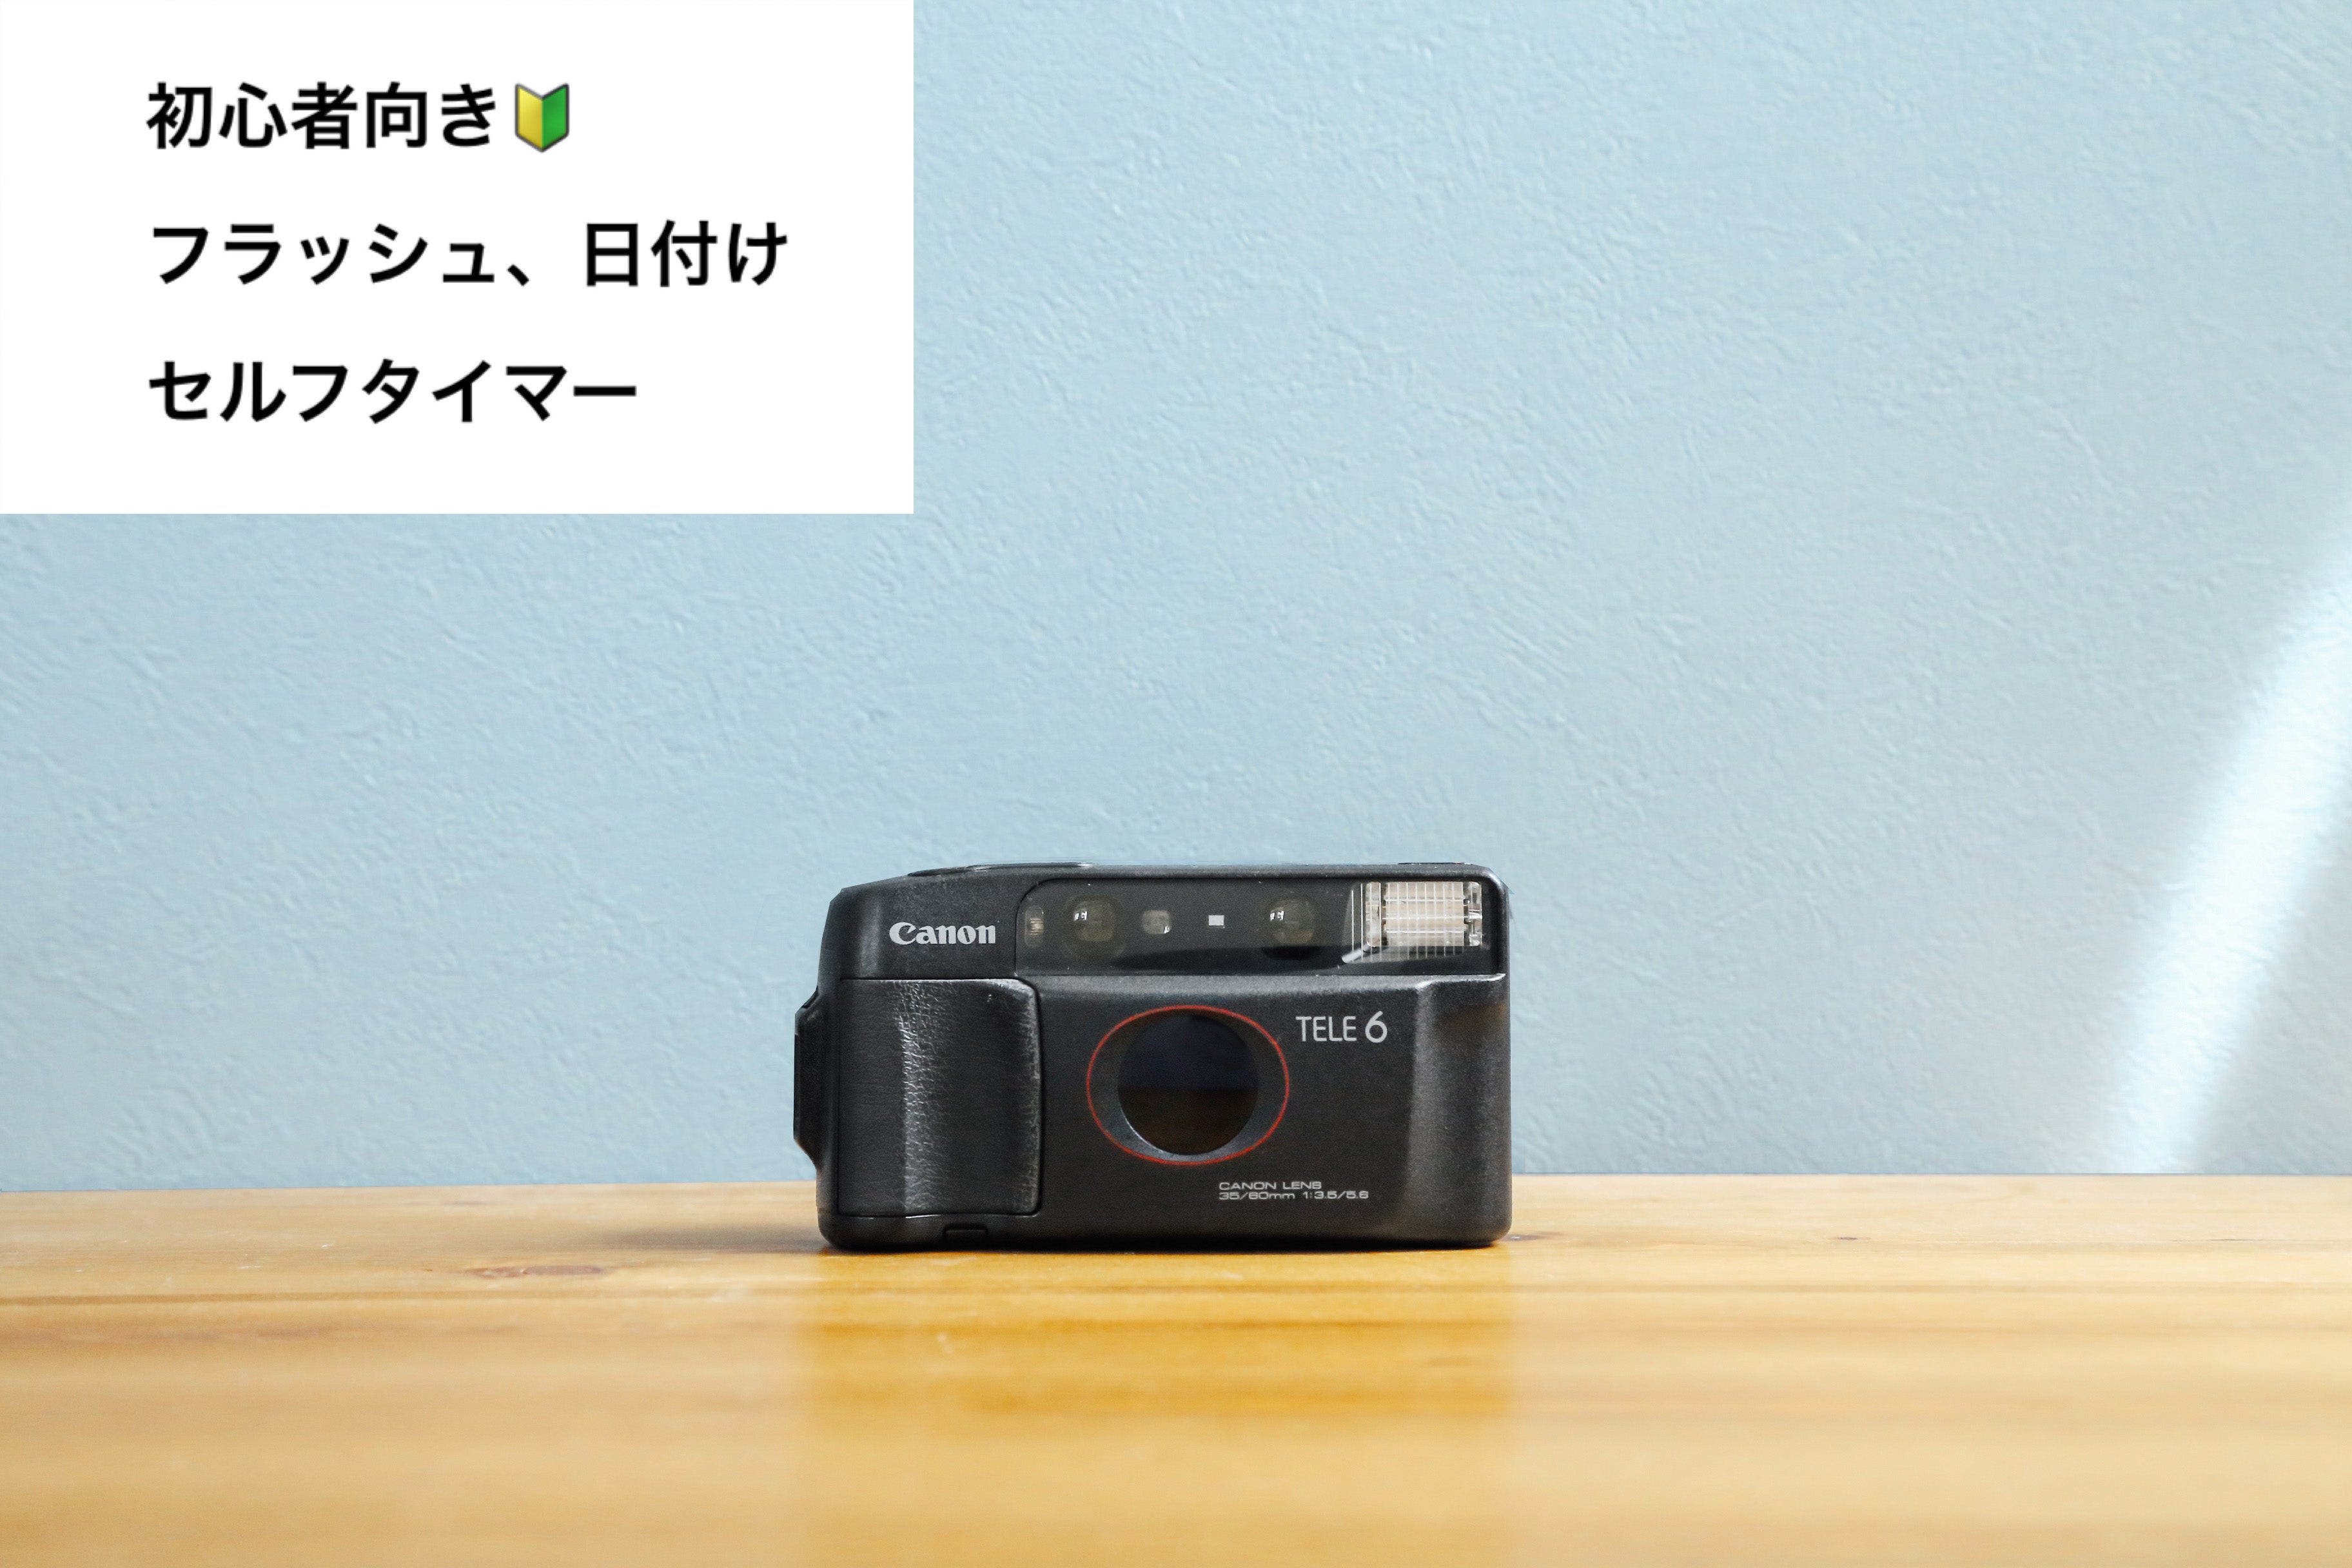 Canon Autoboy TELE6 おすすめフイルムカメラ♪ #7000毎日発送のメルカメラ